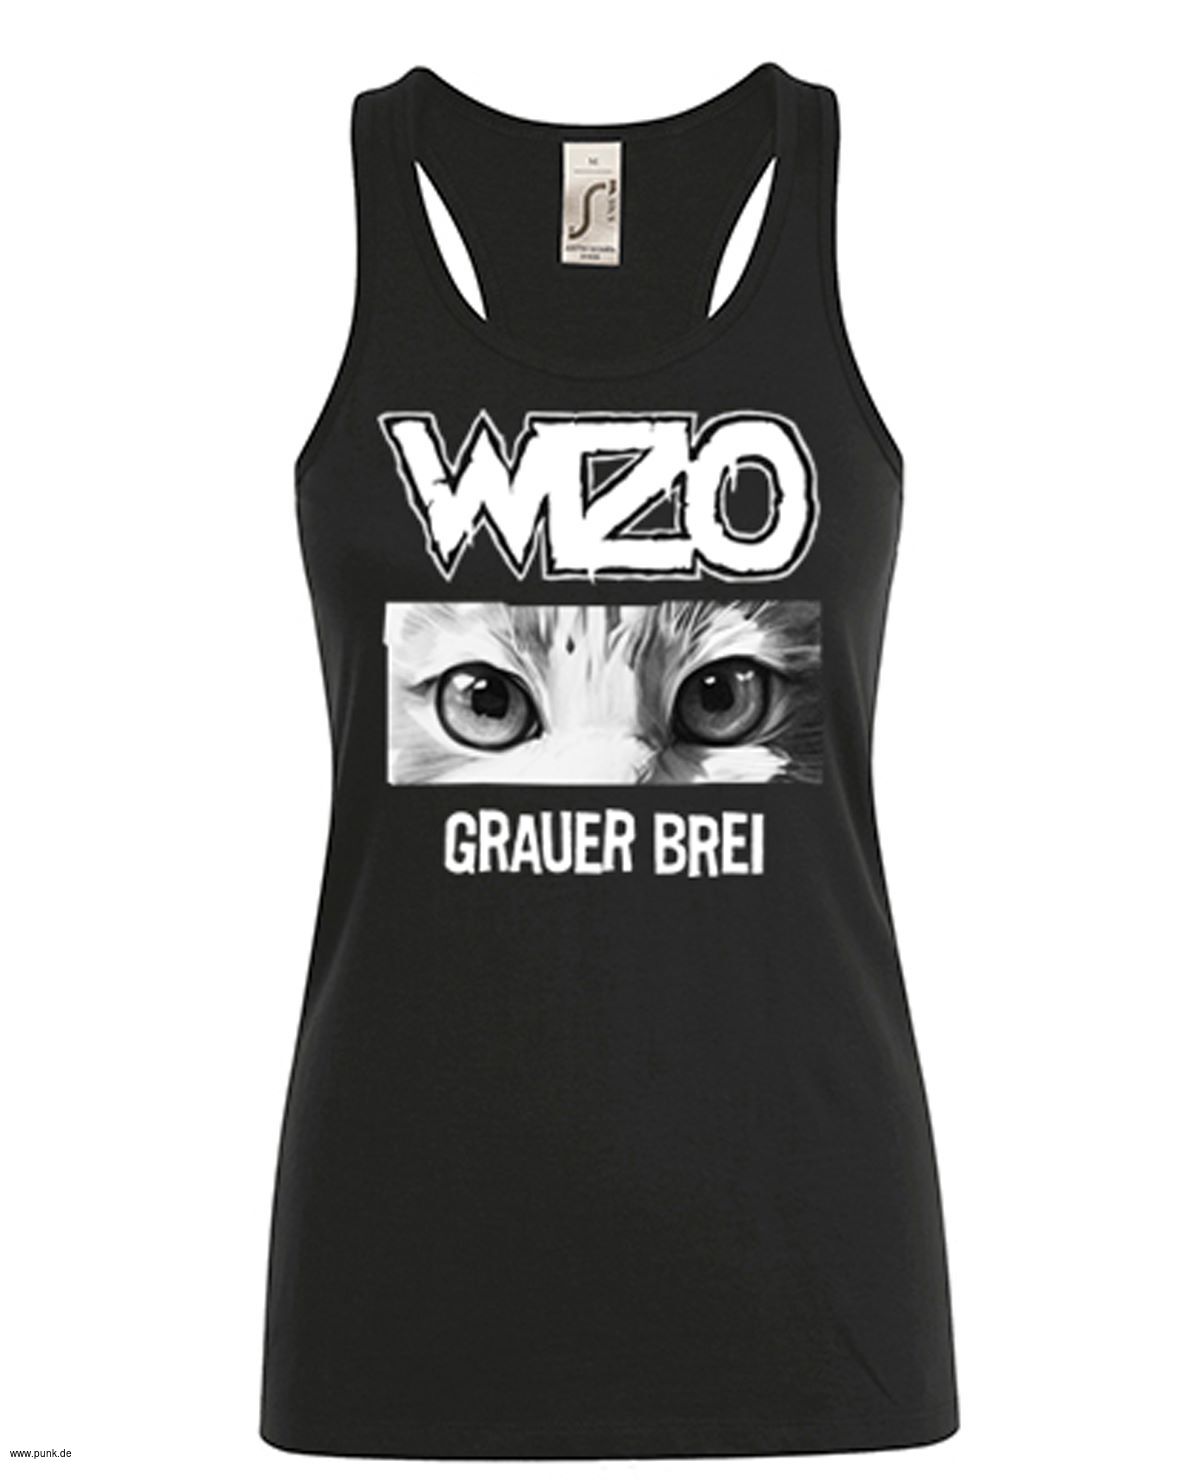 WIZO: Grauer Brei Girl Tank Top